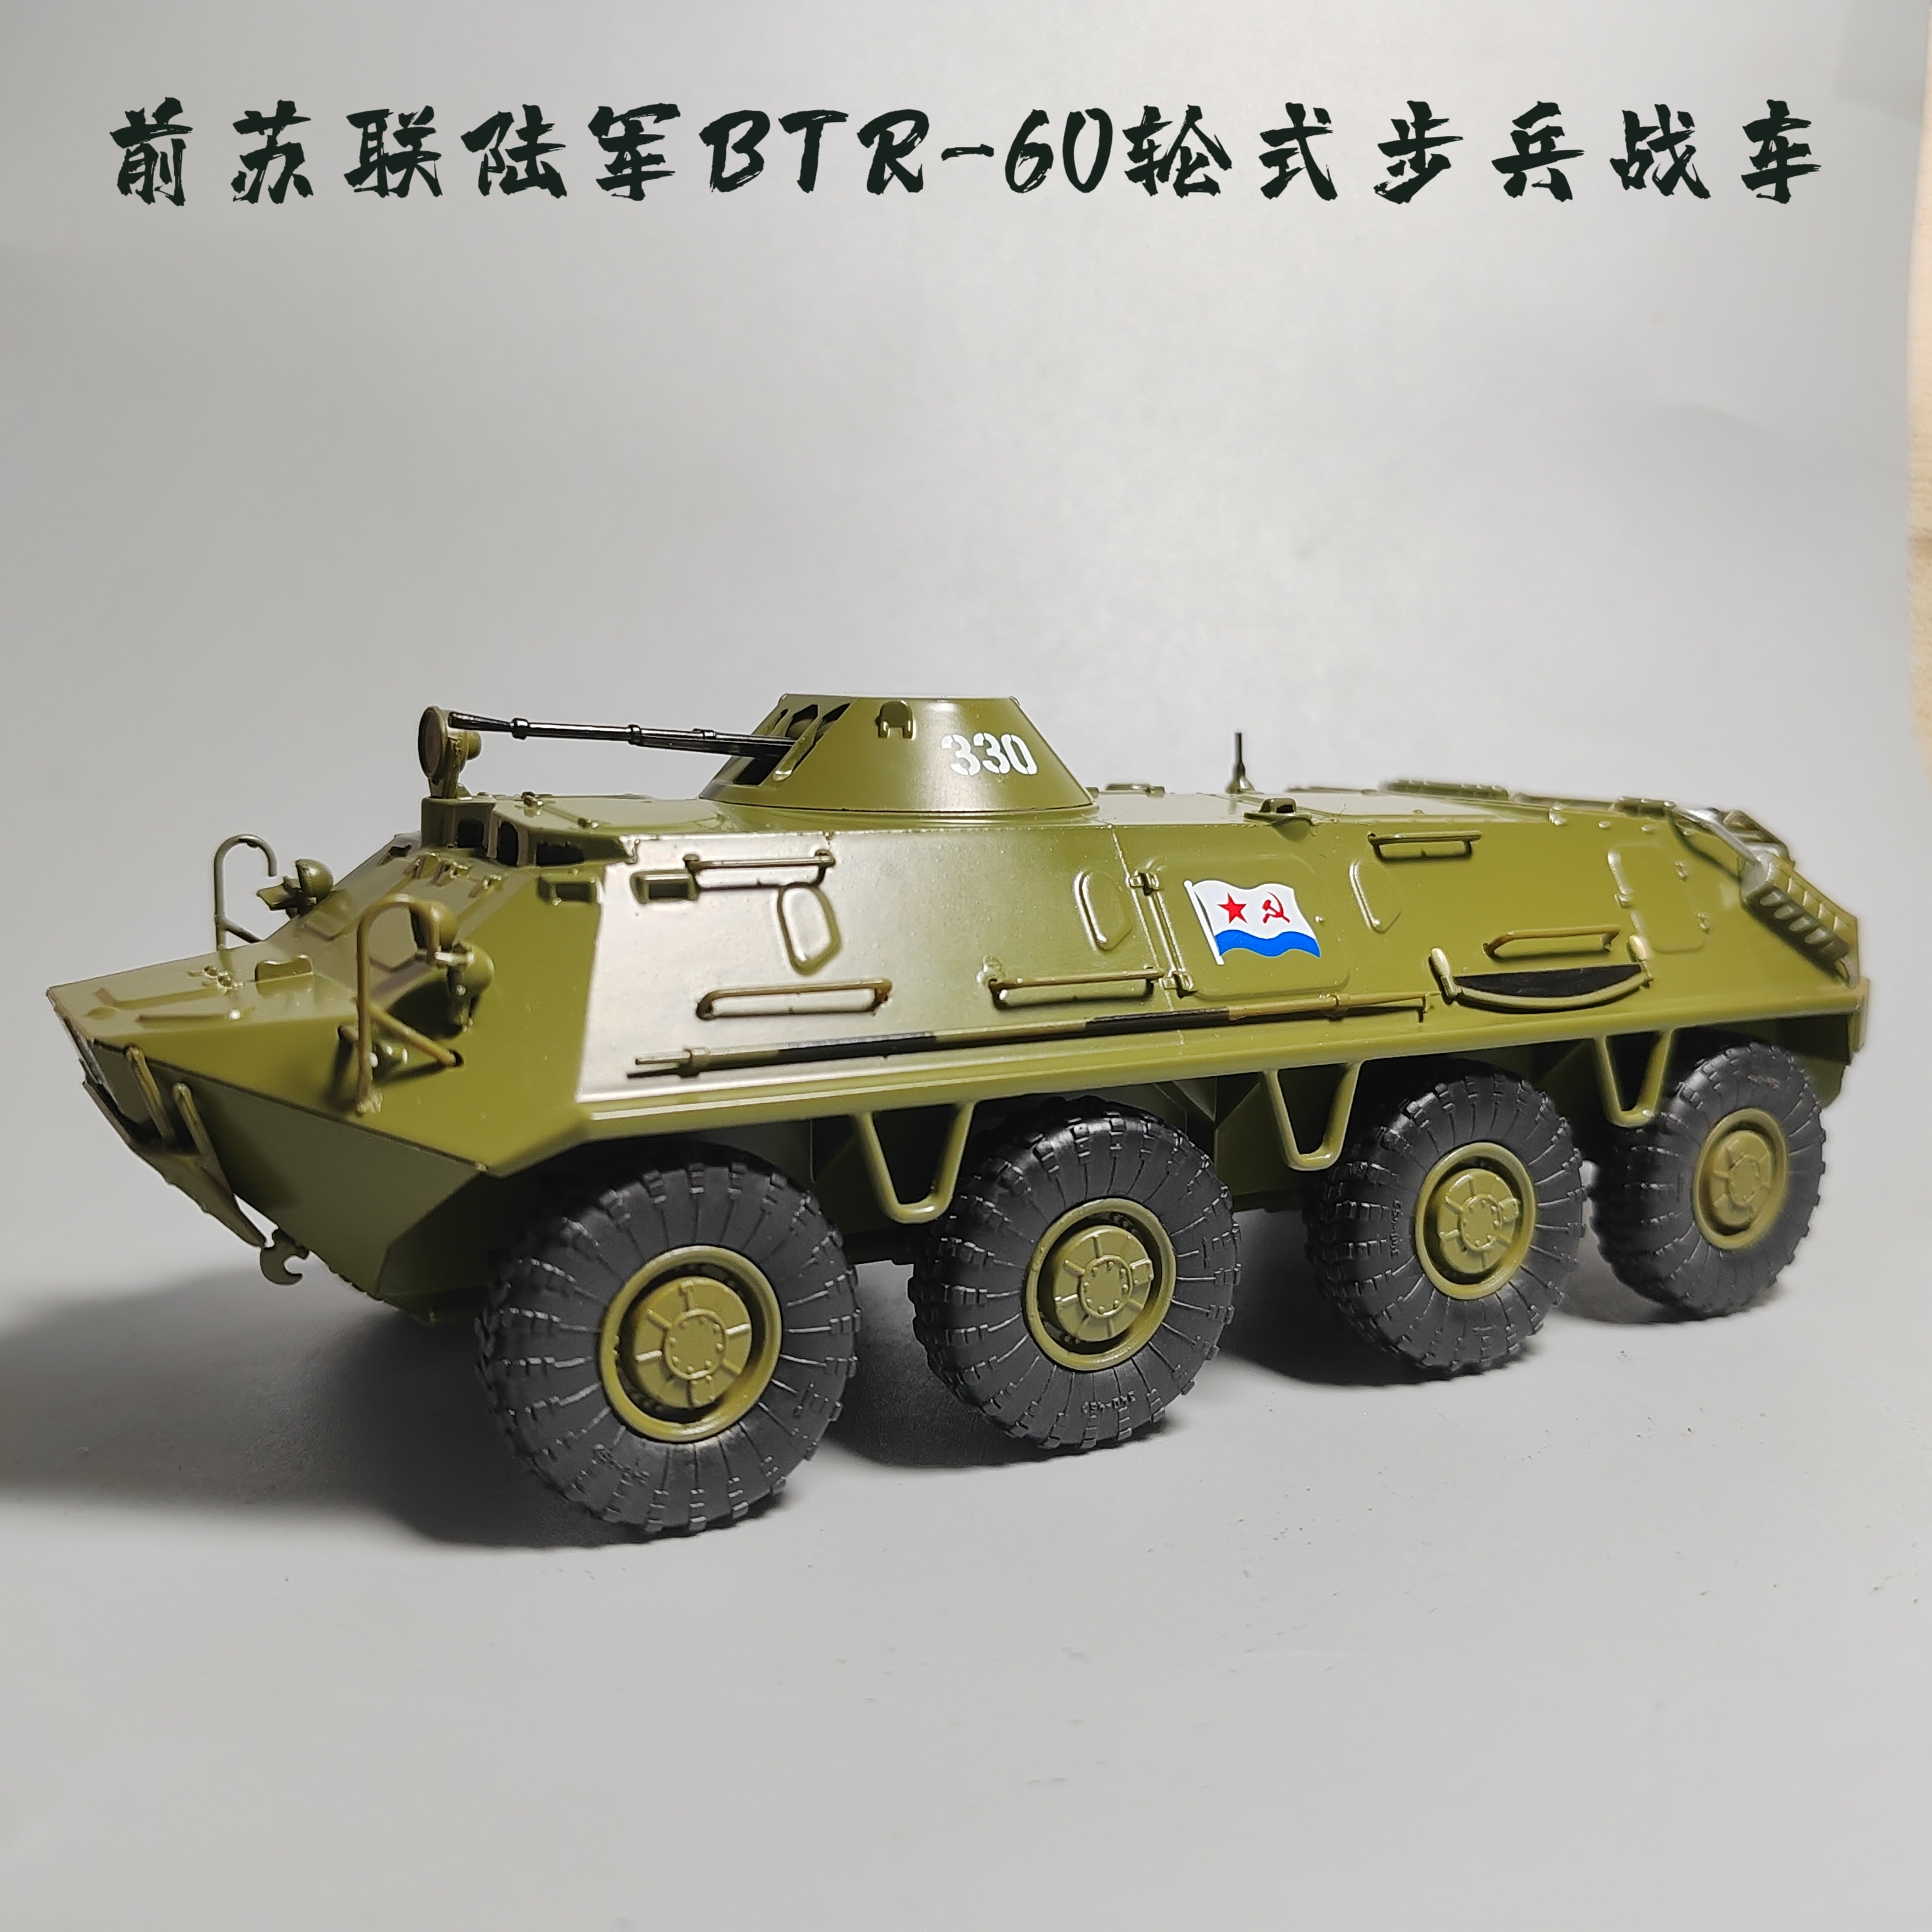 MODIMIO1:43BTR-60轮式步兵战车合金模型仿真军事装甲车摆件微缩